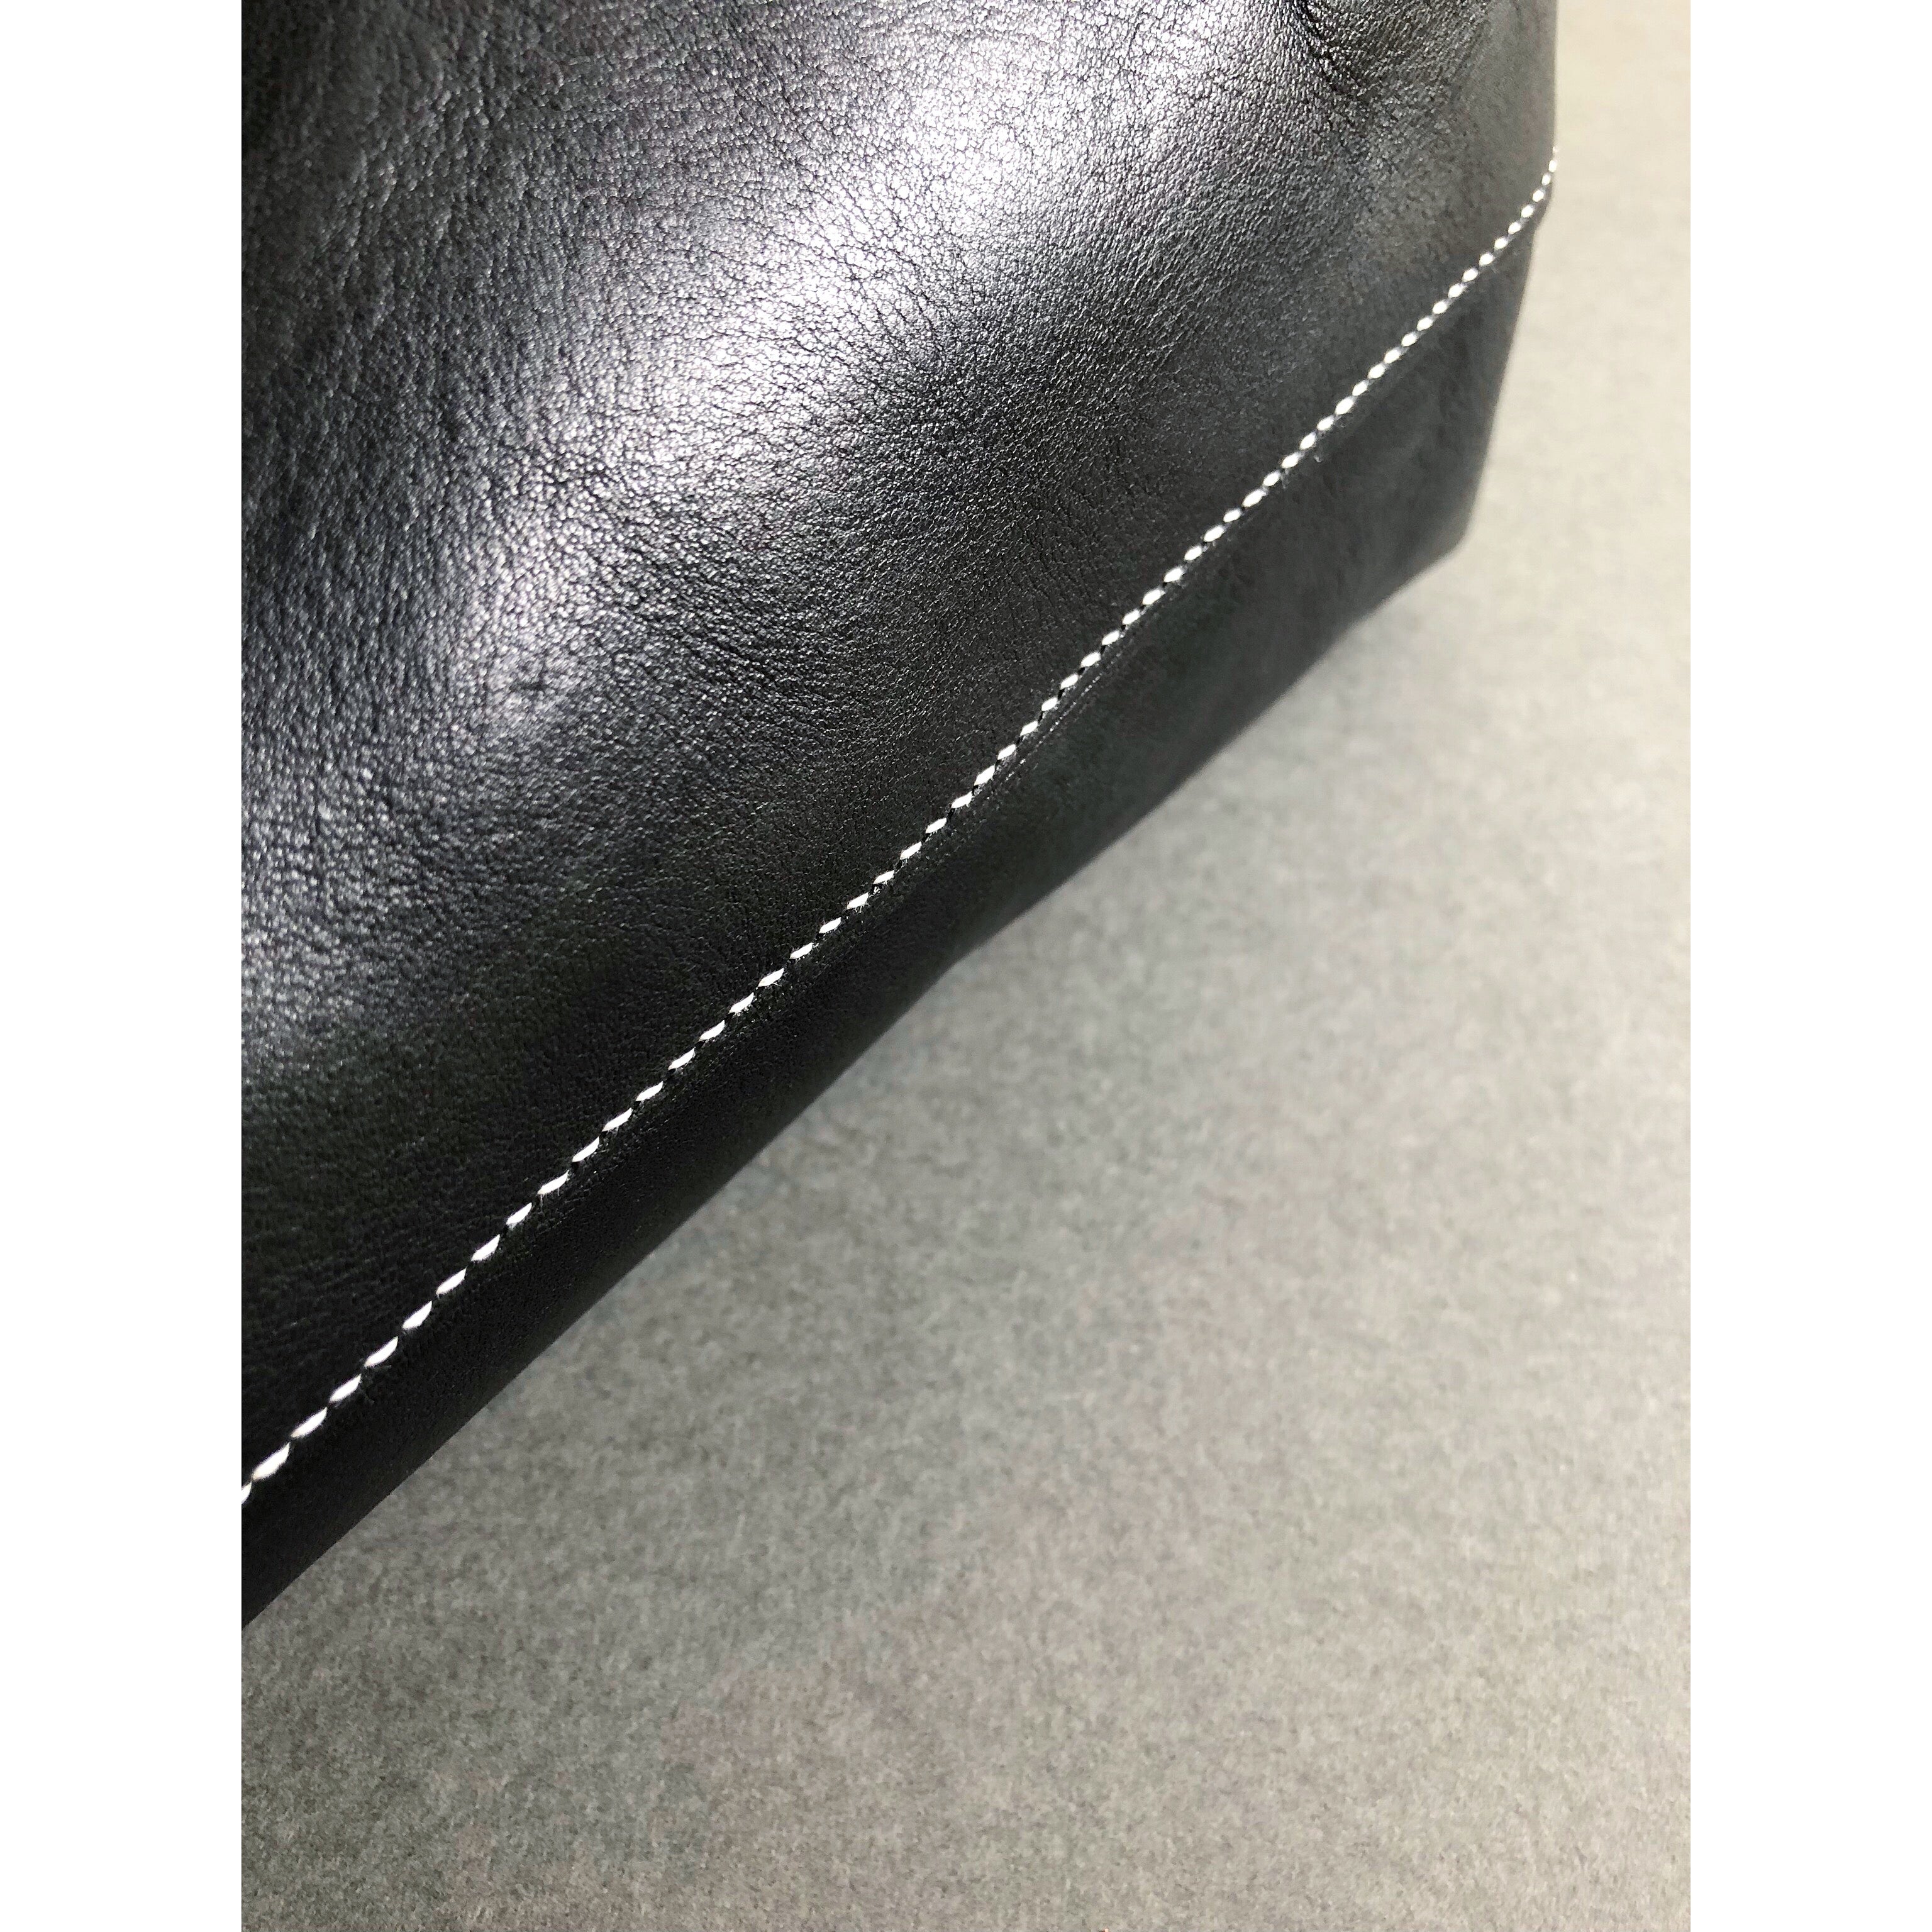 Leather Tote Bag Black